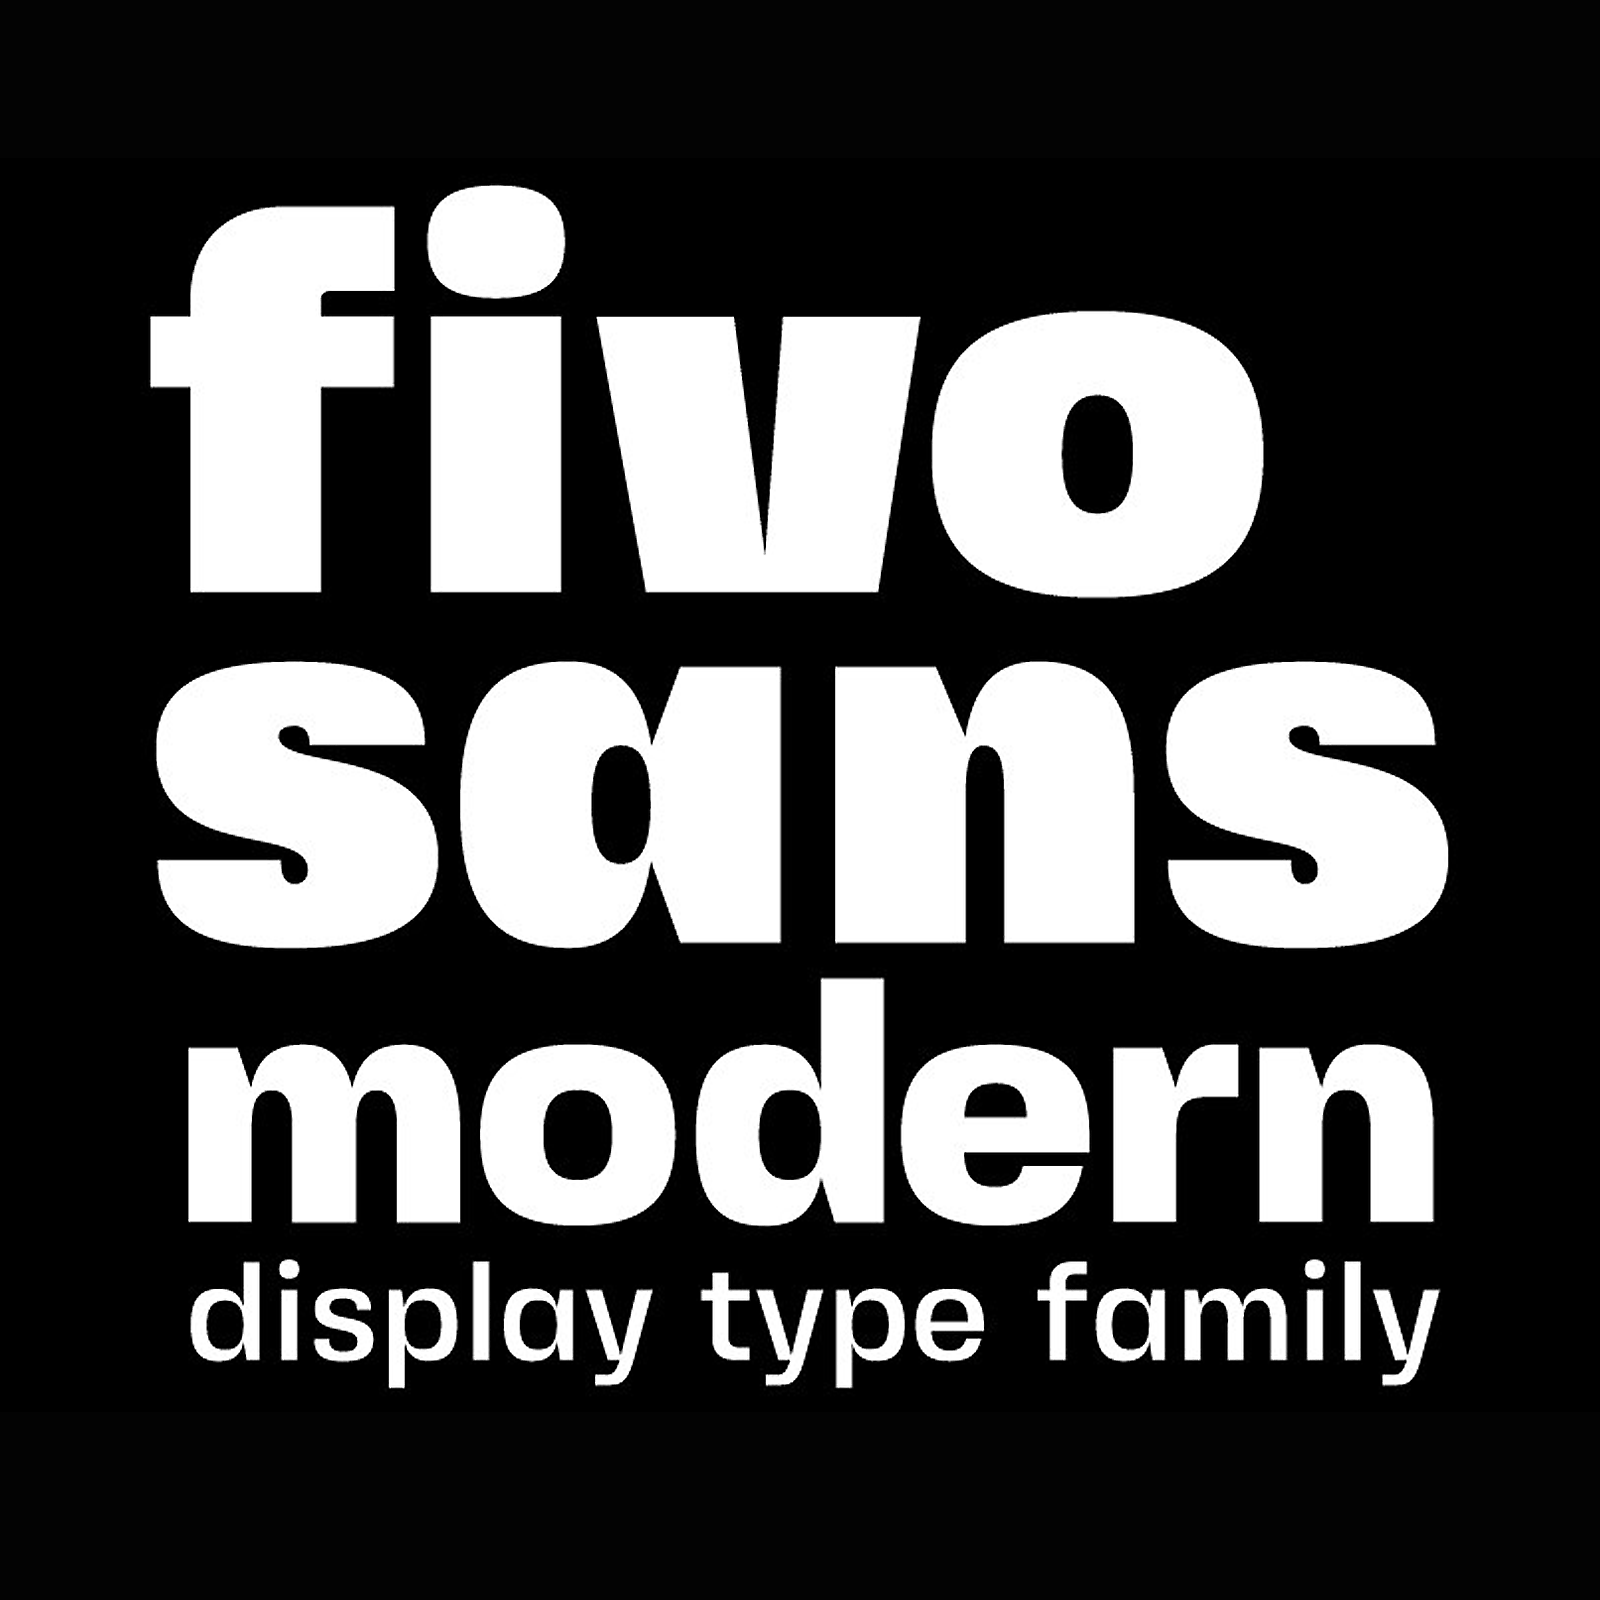 Fivo Sans Modern Font